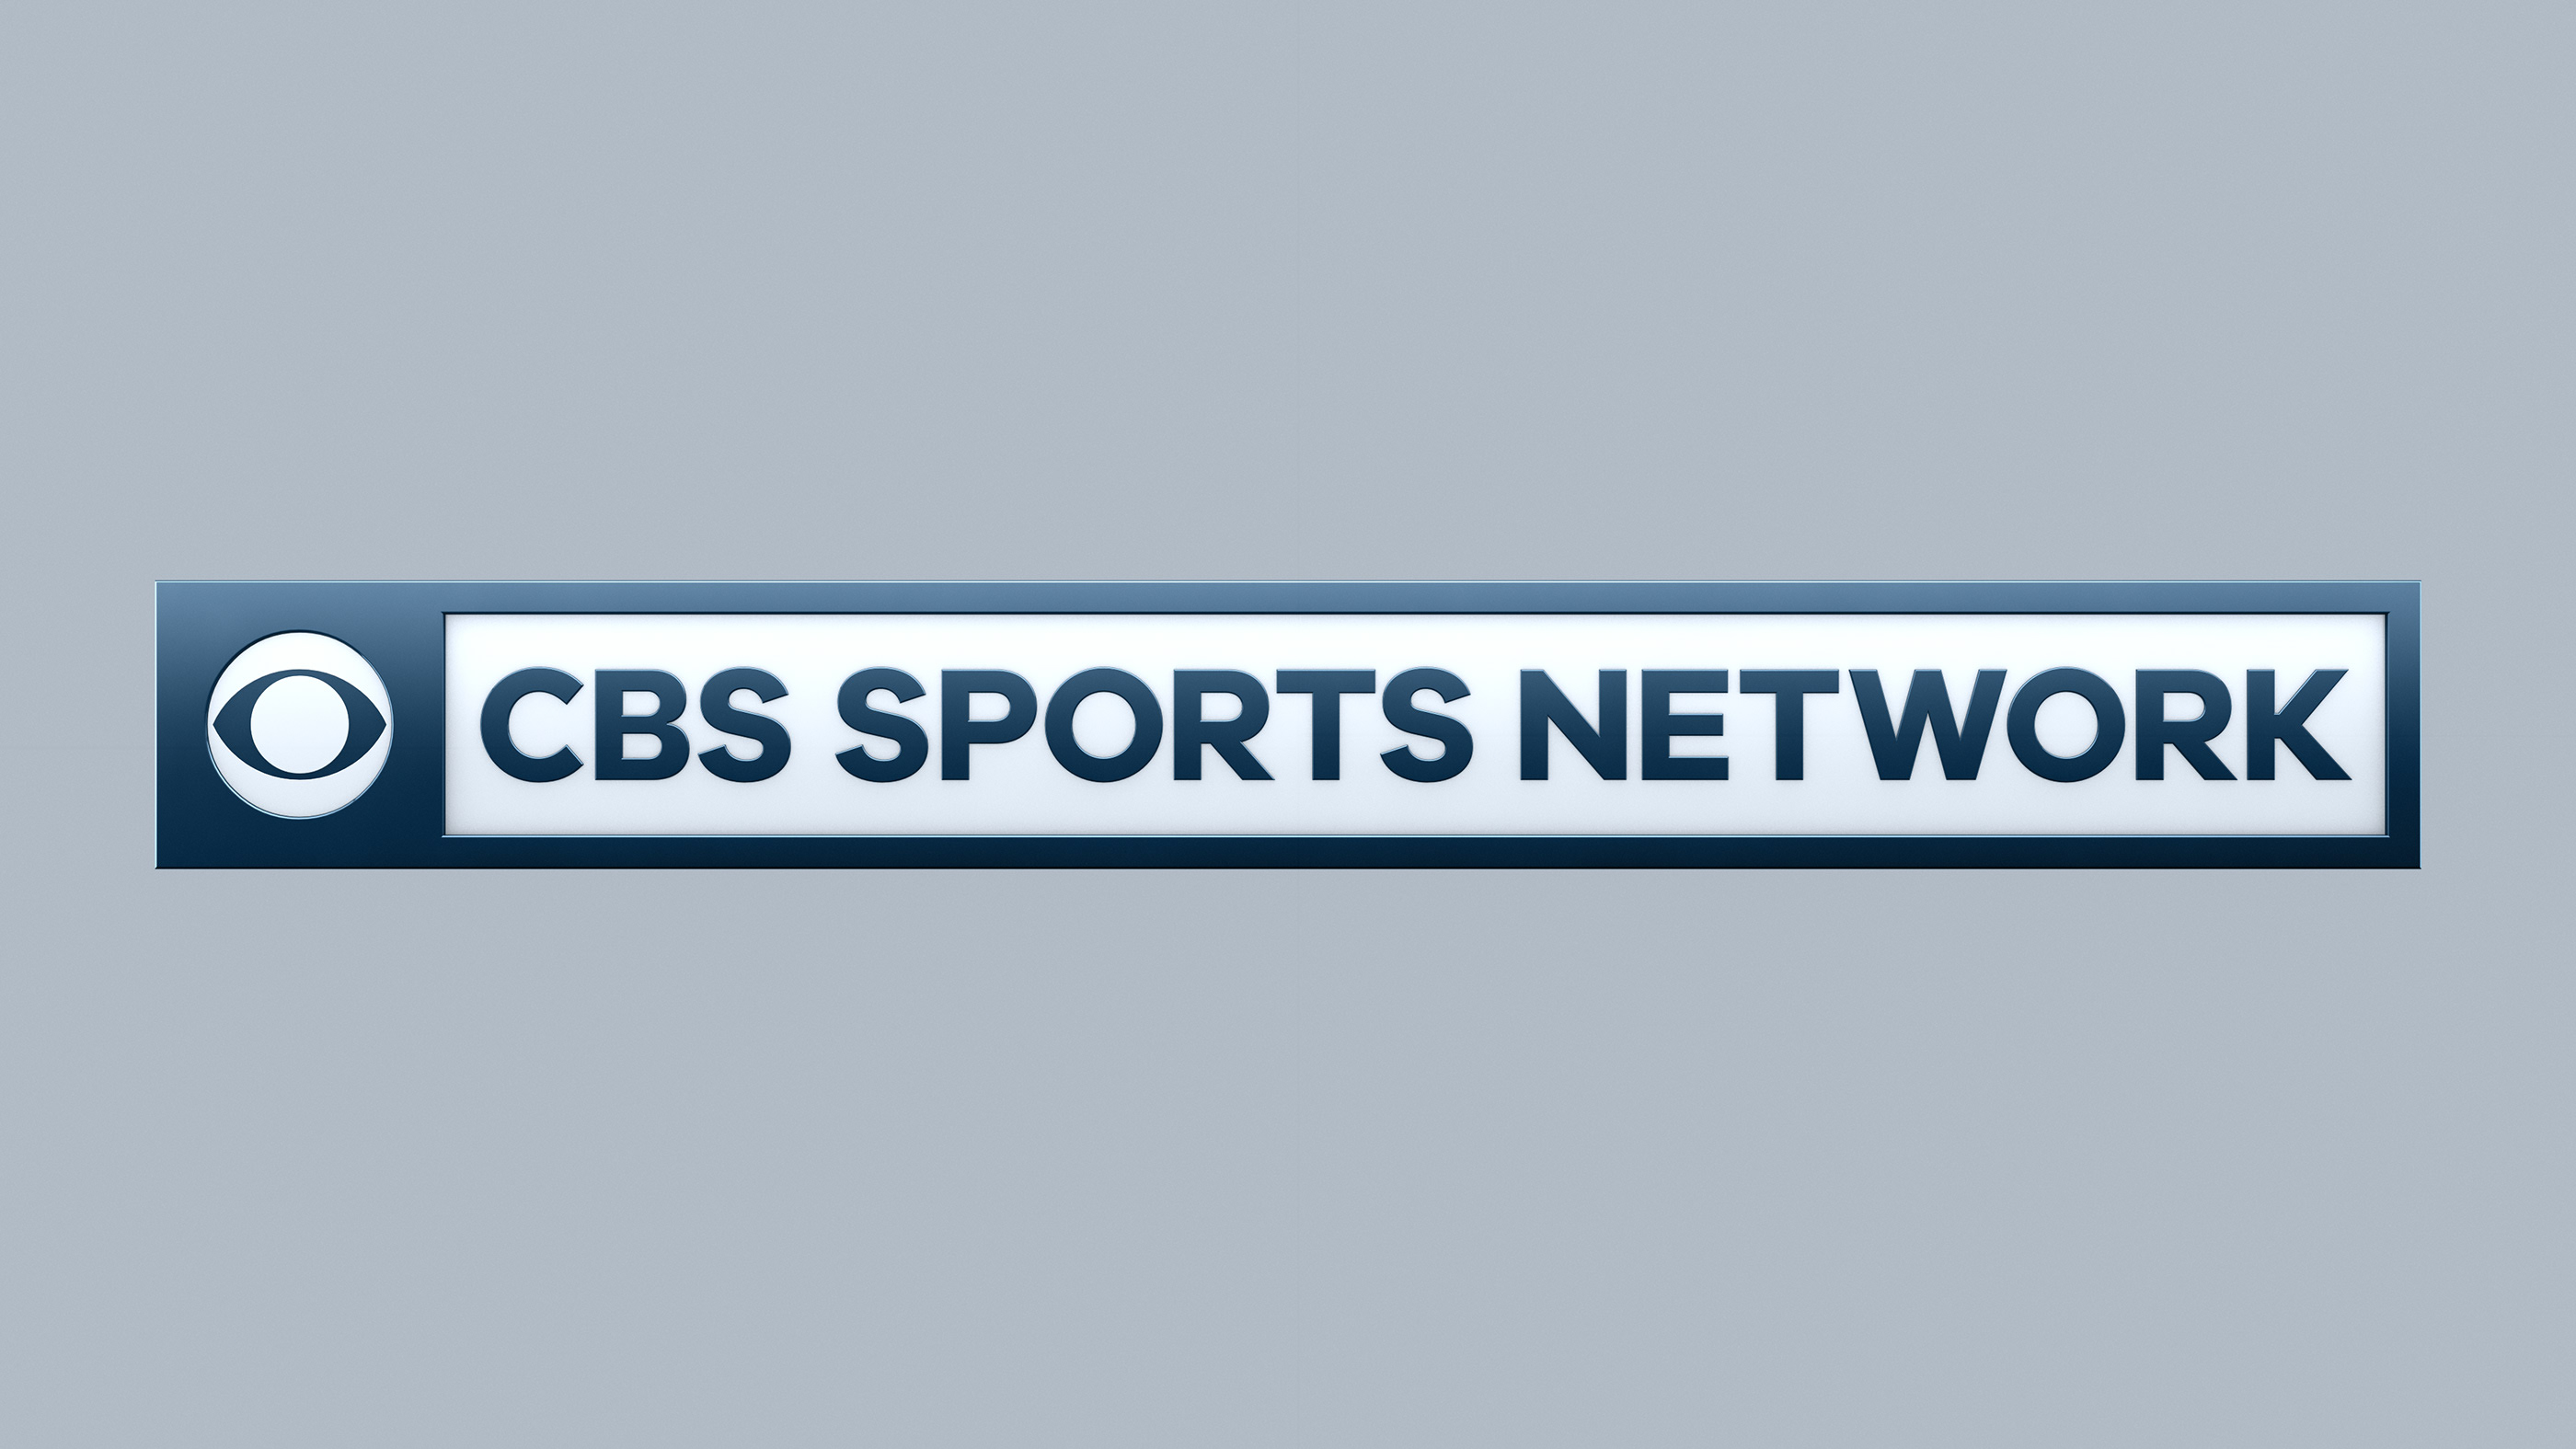 Cbs sport izle. CBC Sport logo. CBC Sport Canli. CBS logo animation. Nick on CBS logo.